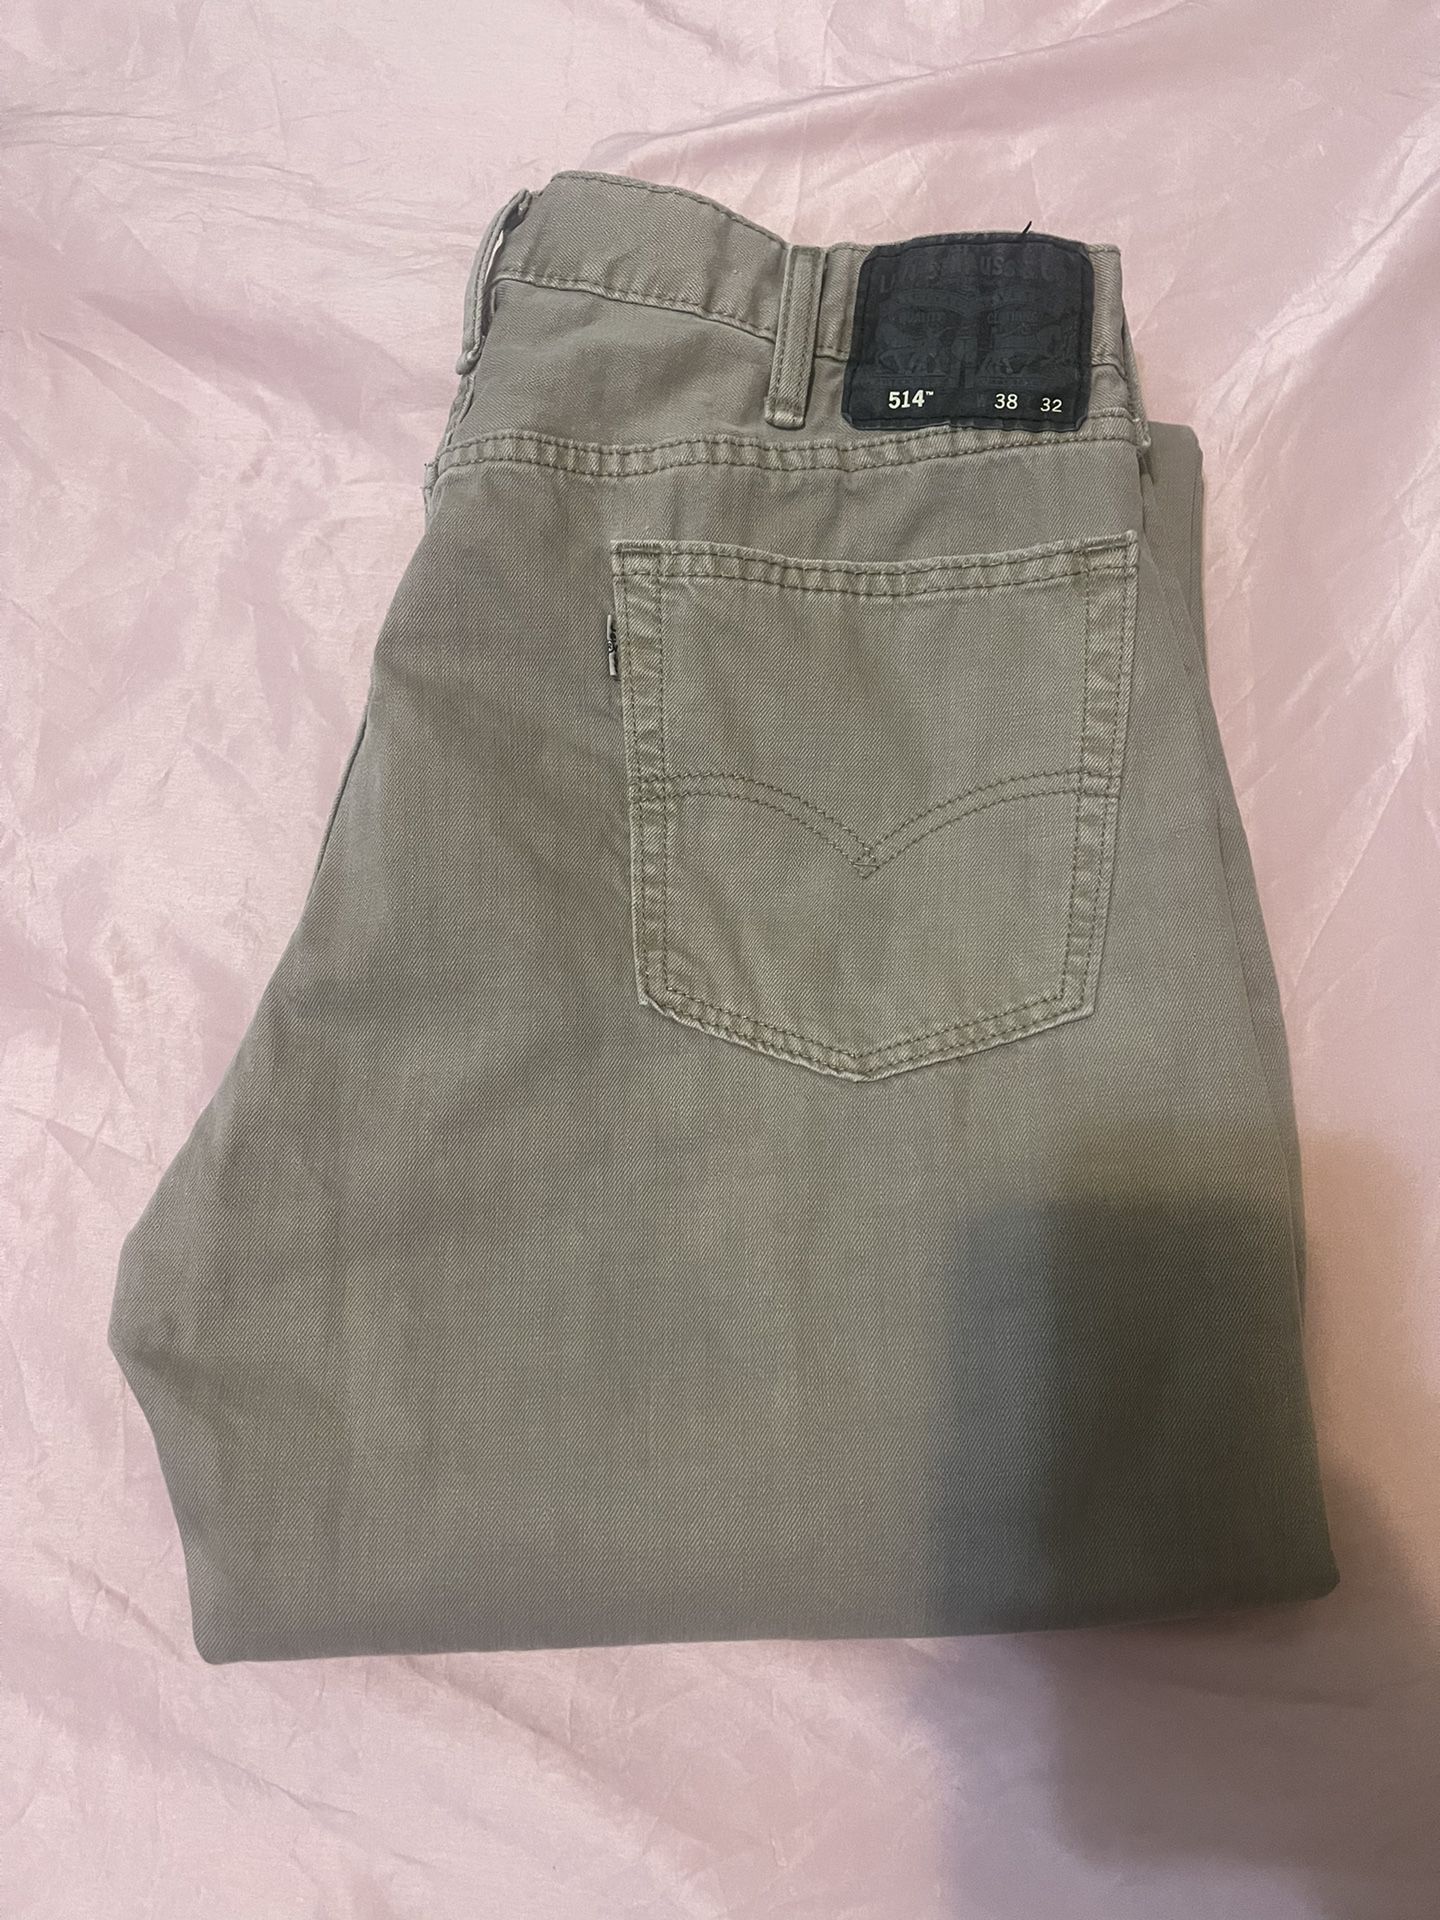 Levi’s 514 Men’s straight leg jeans soft wash Tan khaki Size 38X32